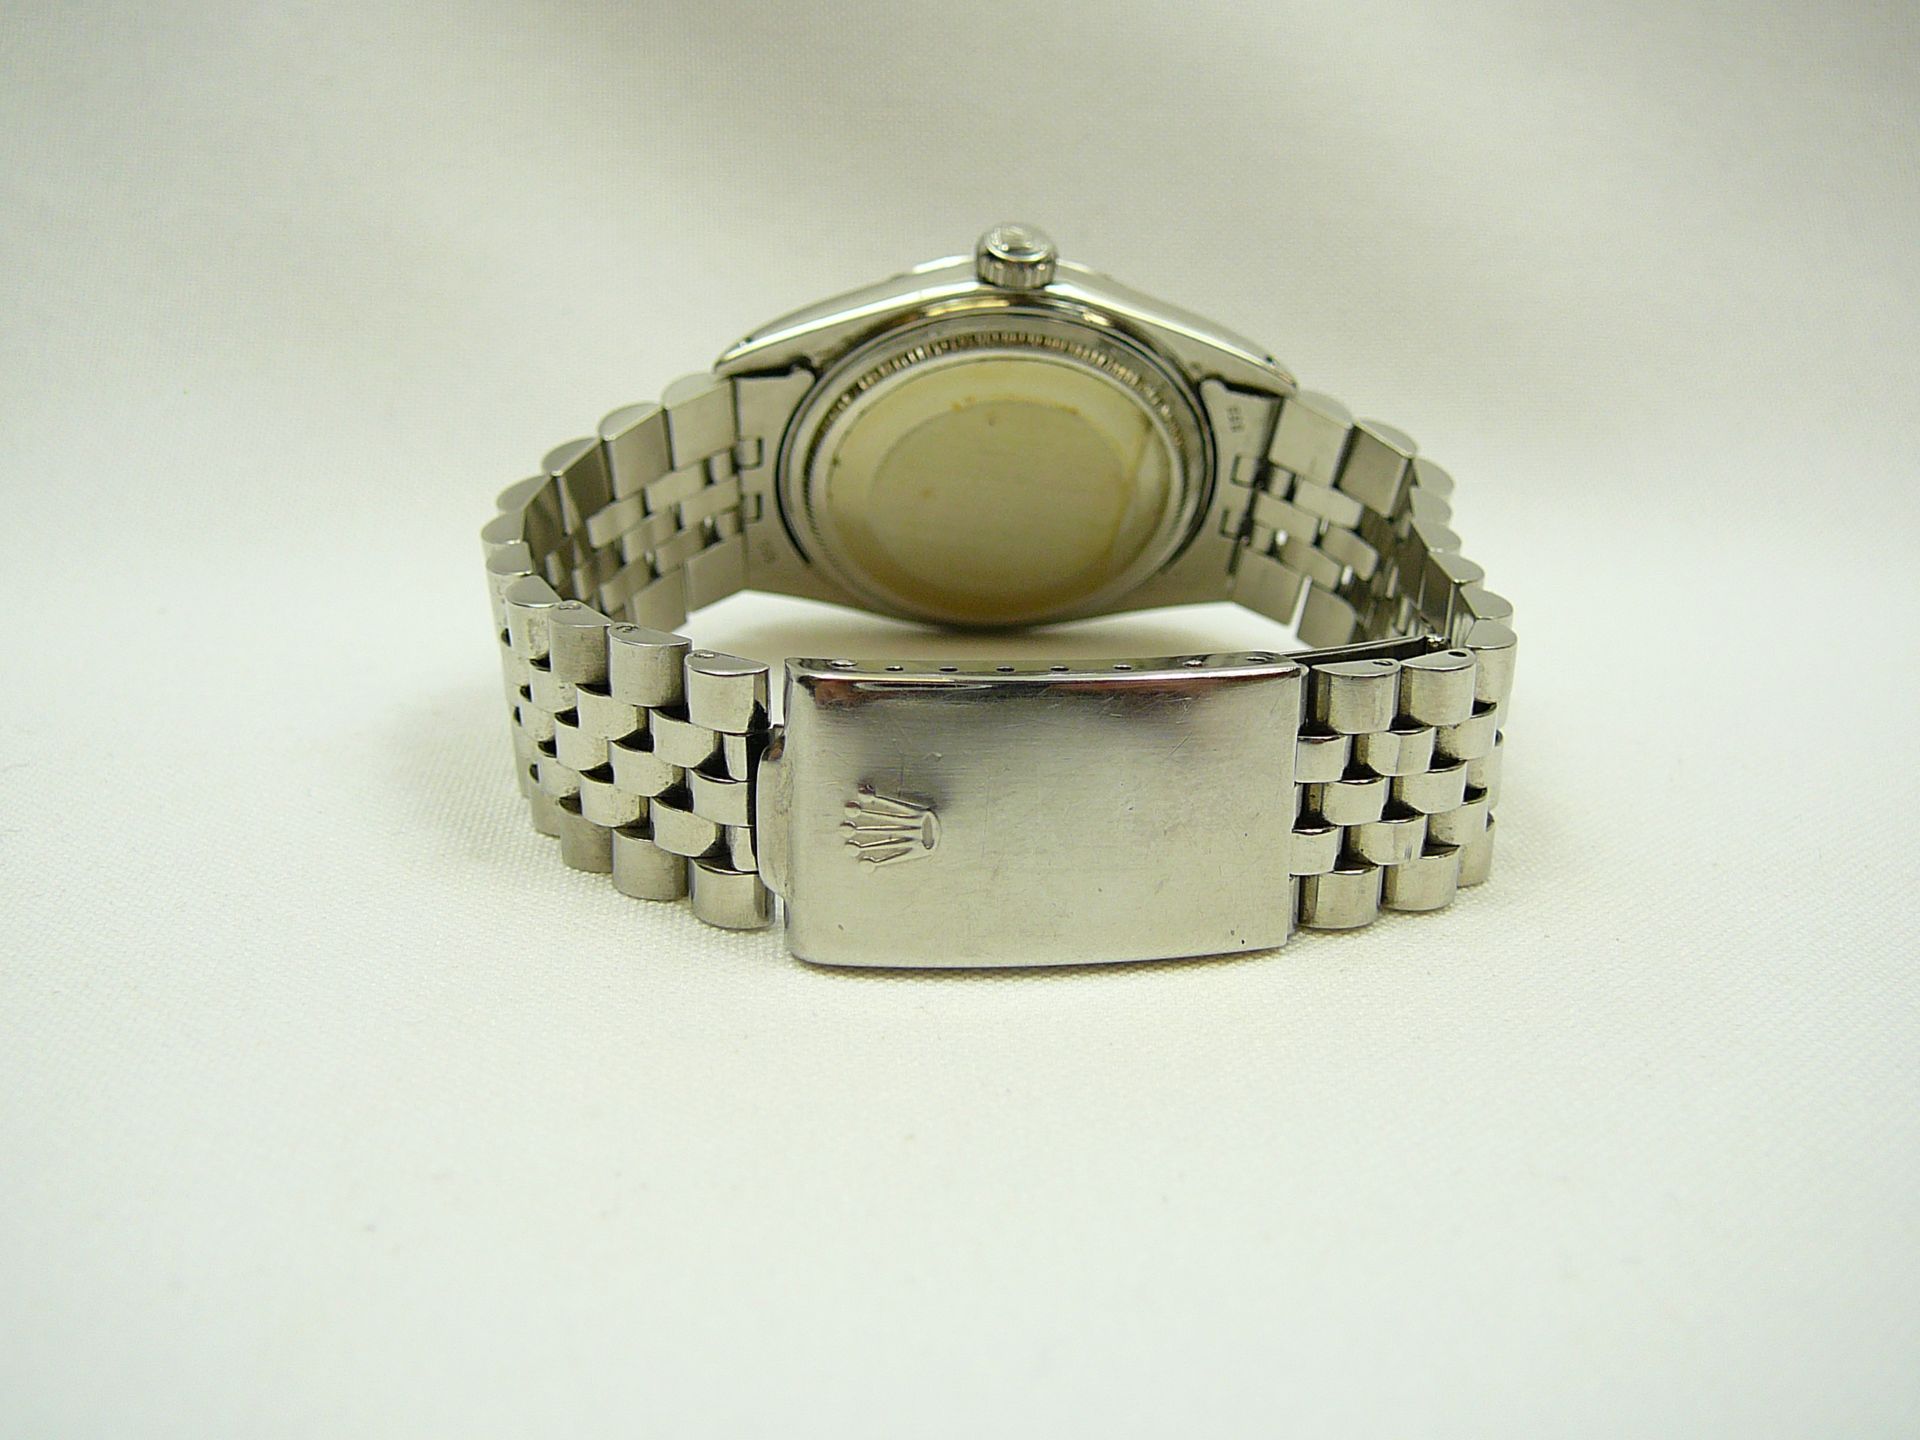 Gents Rolex Wristwatch - Image 5 of 6